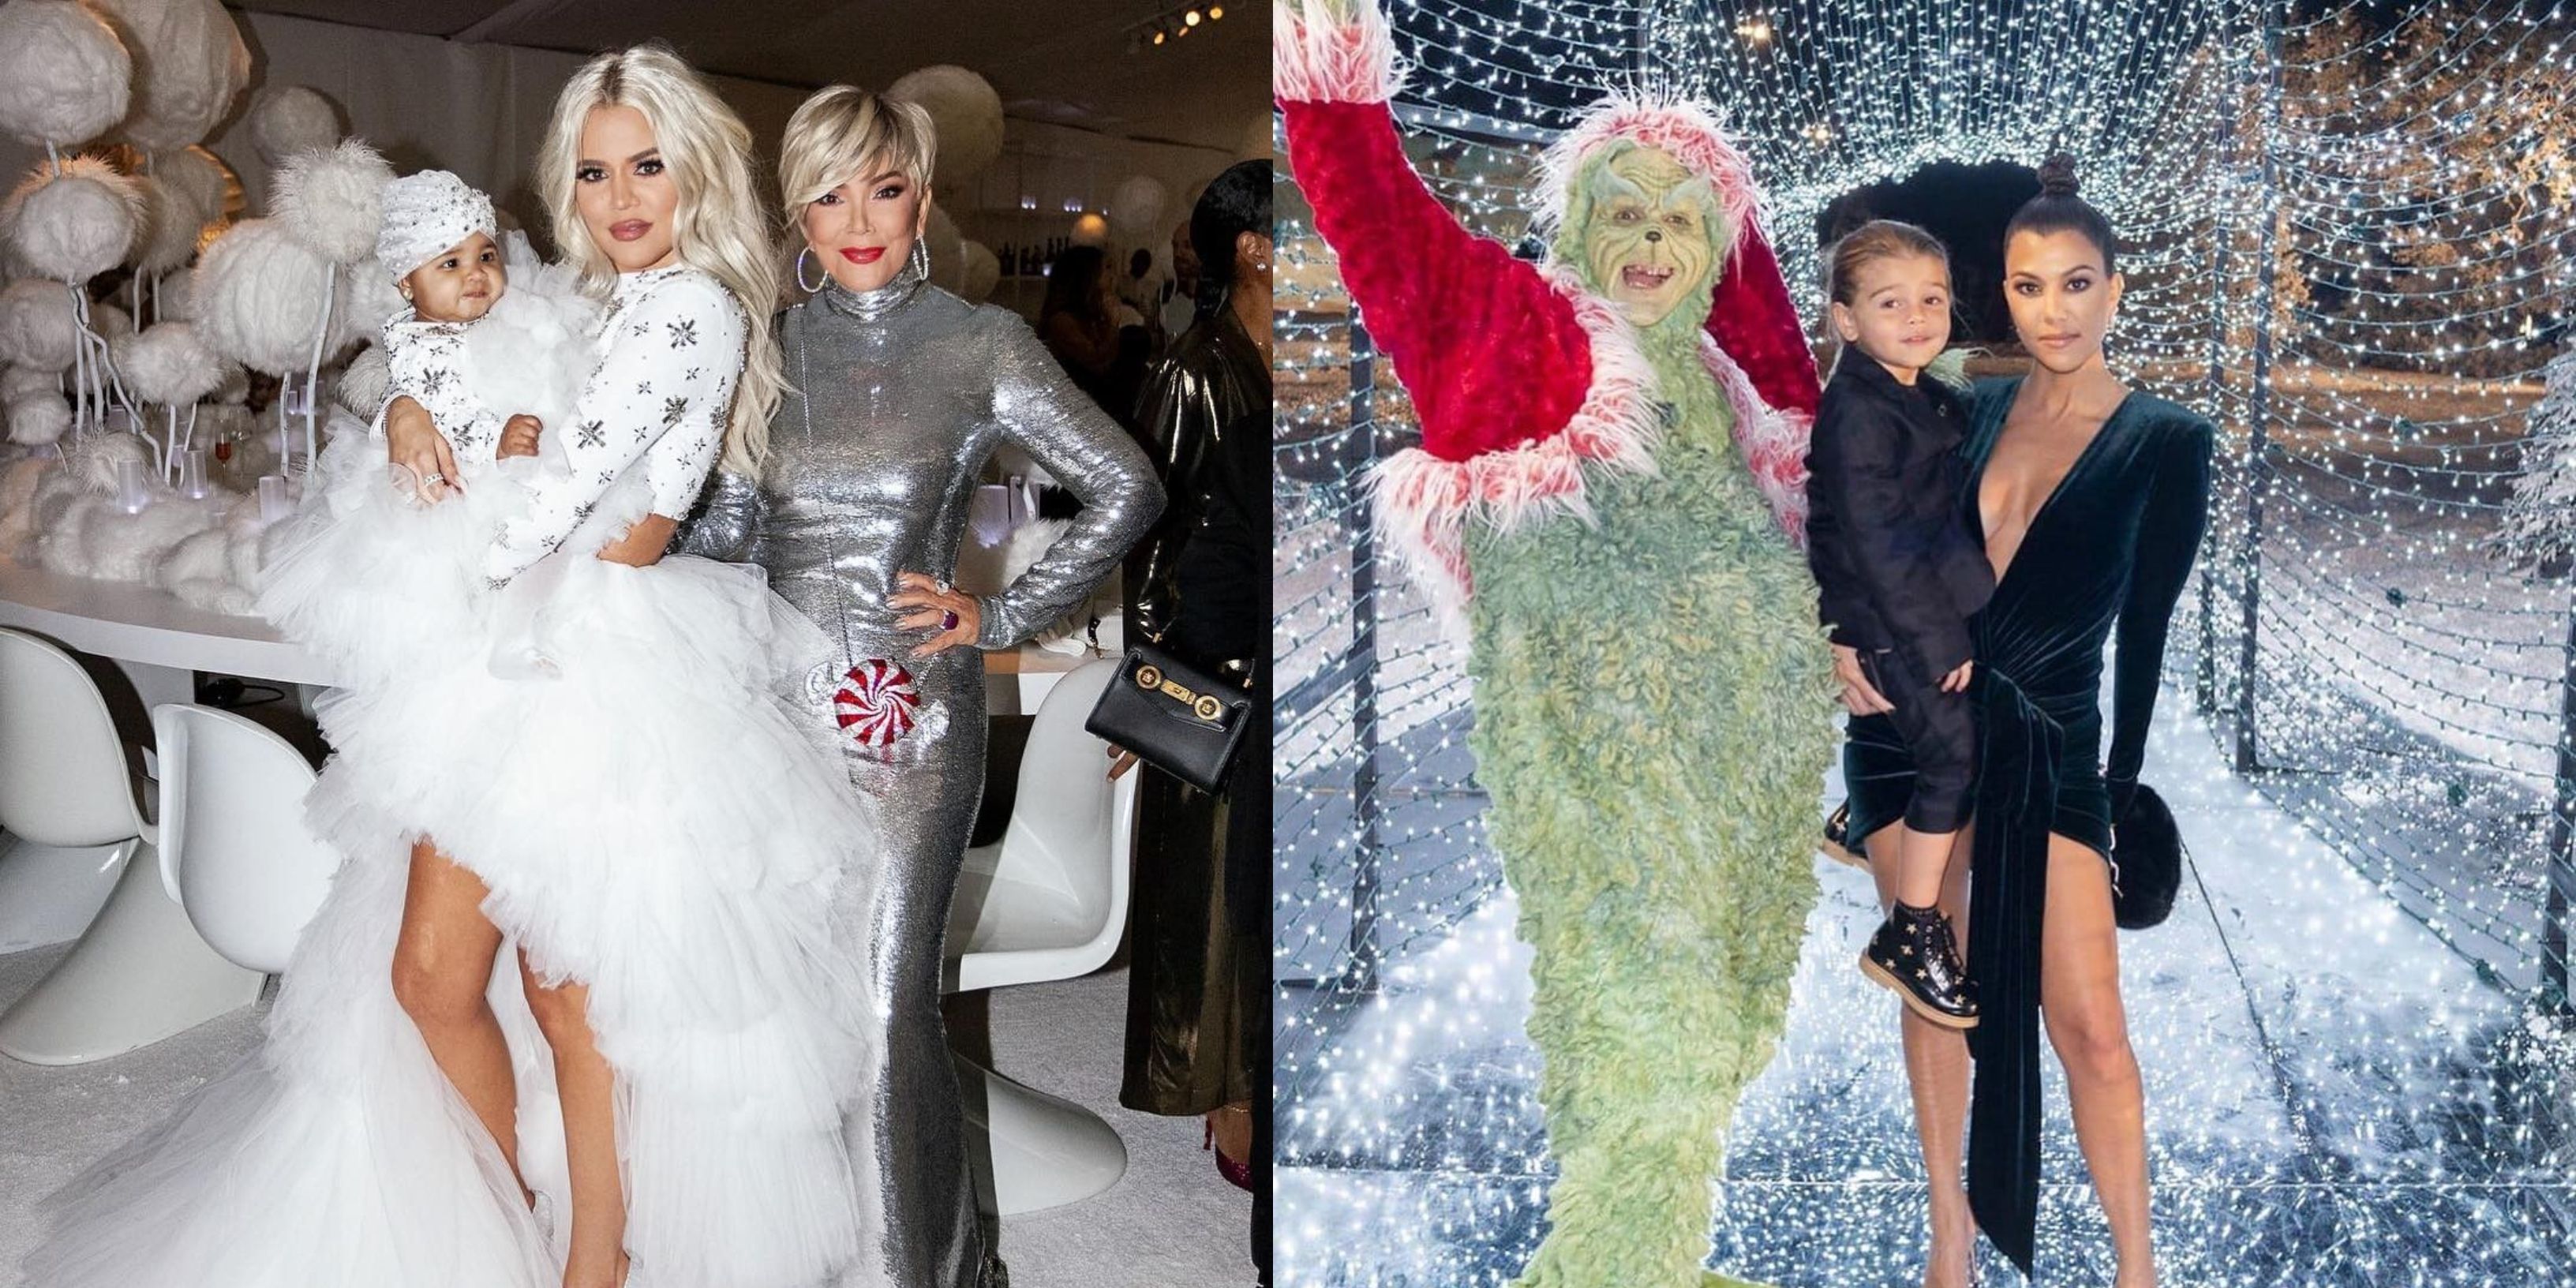 The Kardashian family Christmas in 2018